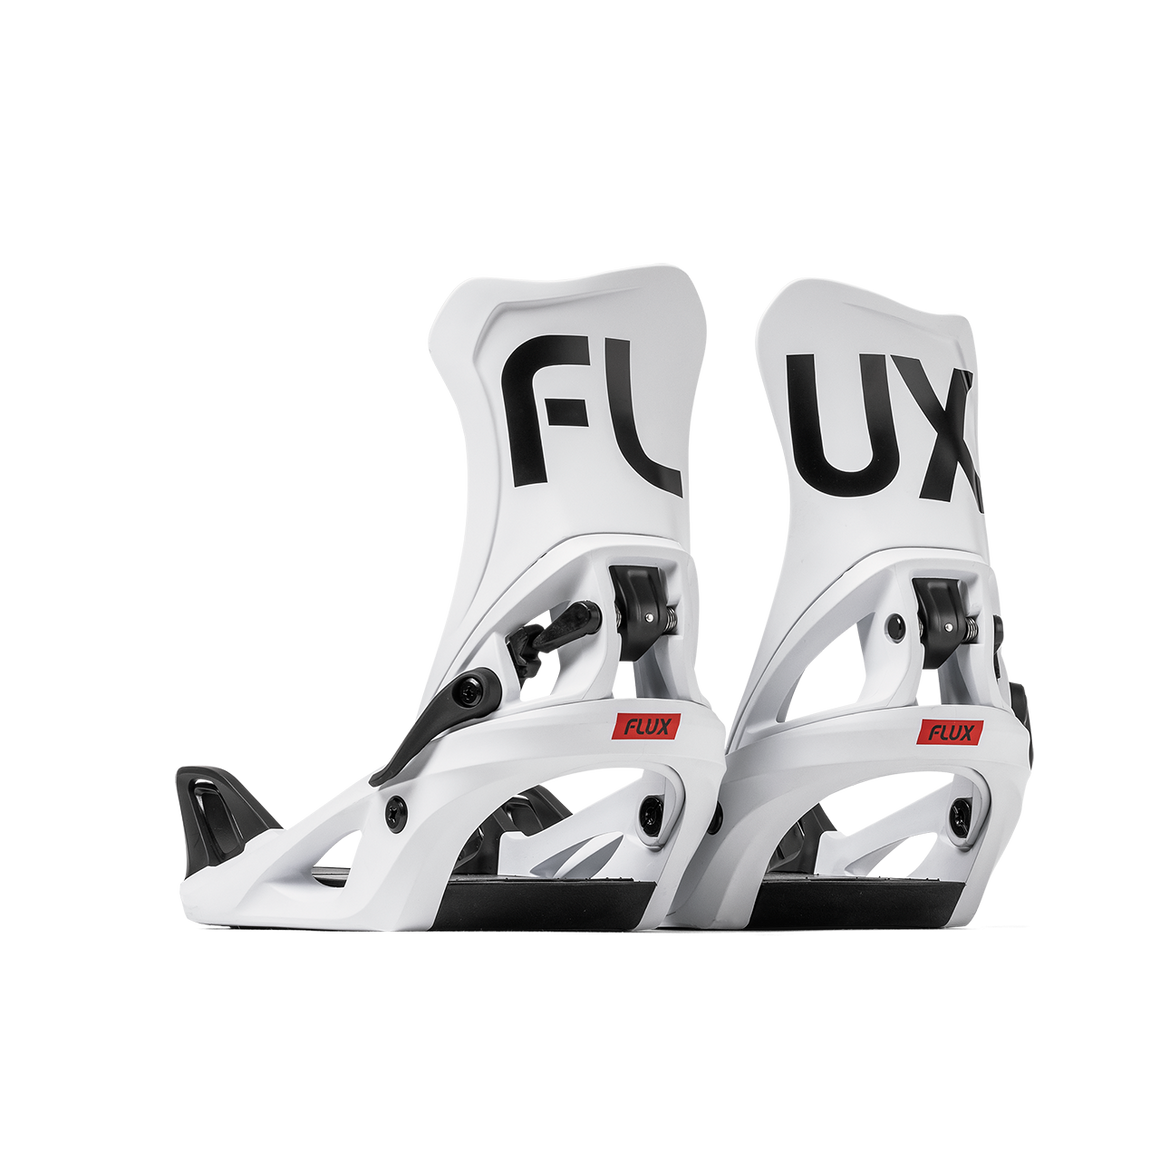 fluxdc ステップオンブーツ新品とFLUX ステップオンビンディングのセット